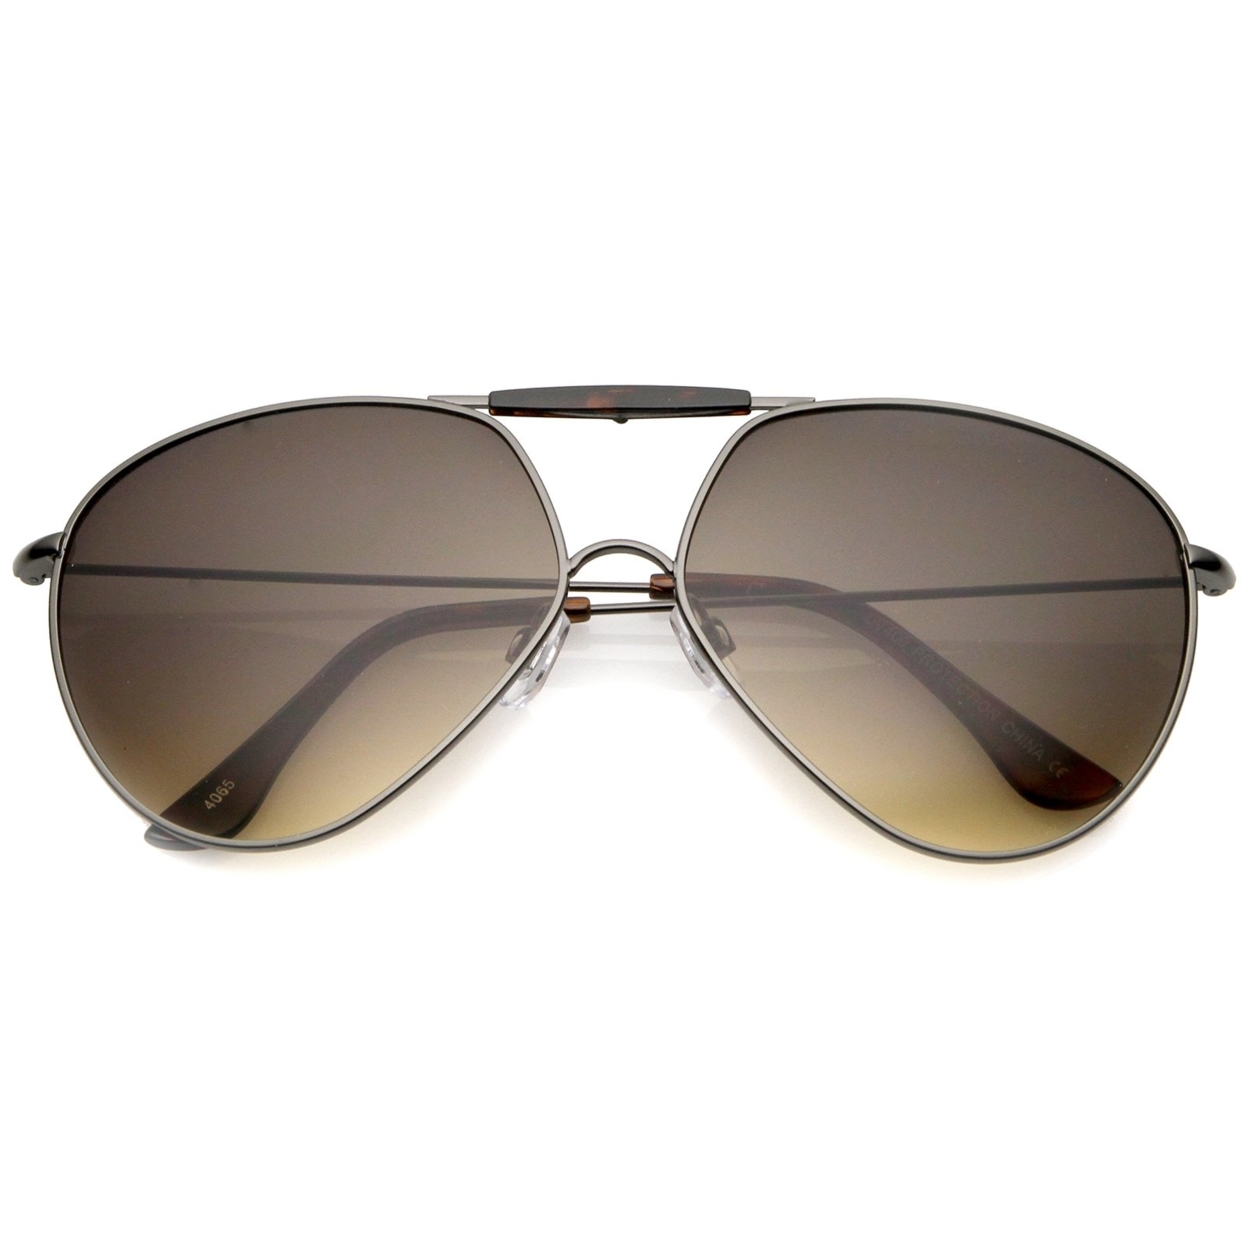 Casual Brow Bar Detail Slim Temple Metal Frame Aviator Sunglasses 62mm - Gunmetal-Tortoise / Smoke Gradient